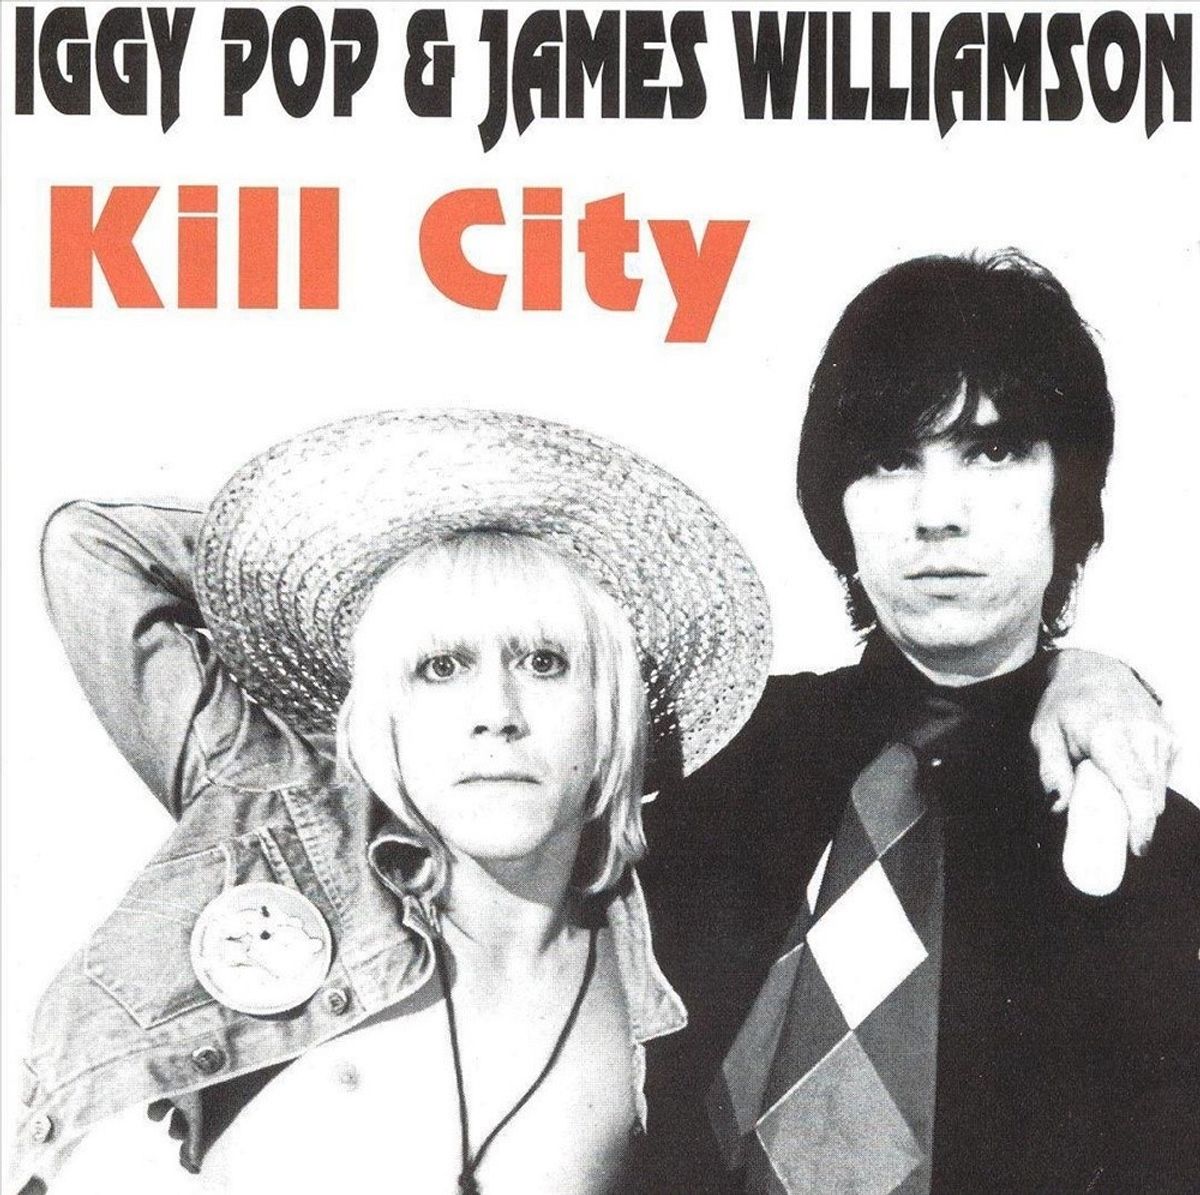 #SoundsLikeARollingStone - Iggy Pop & James Williamson - Kill City (1975)